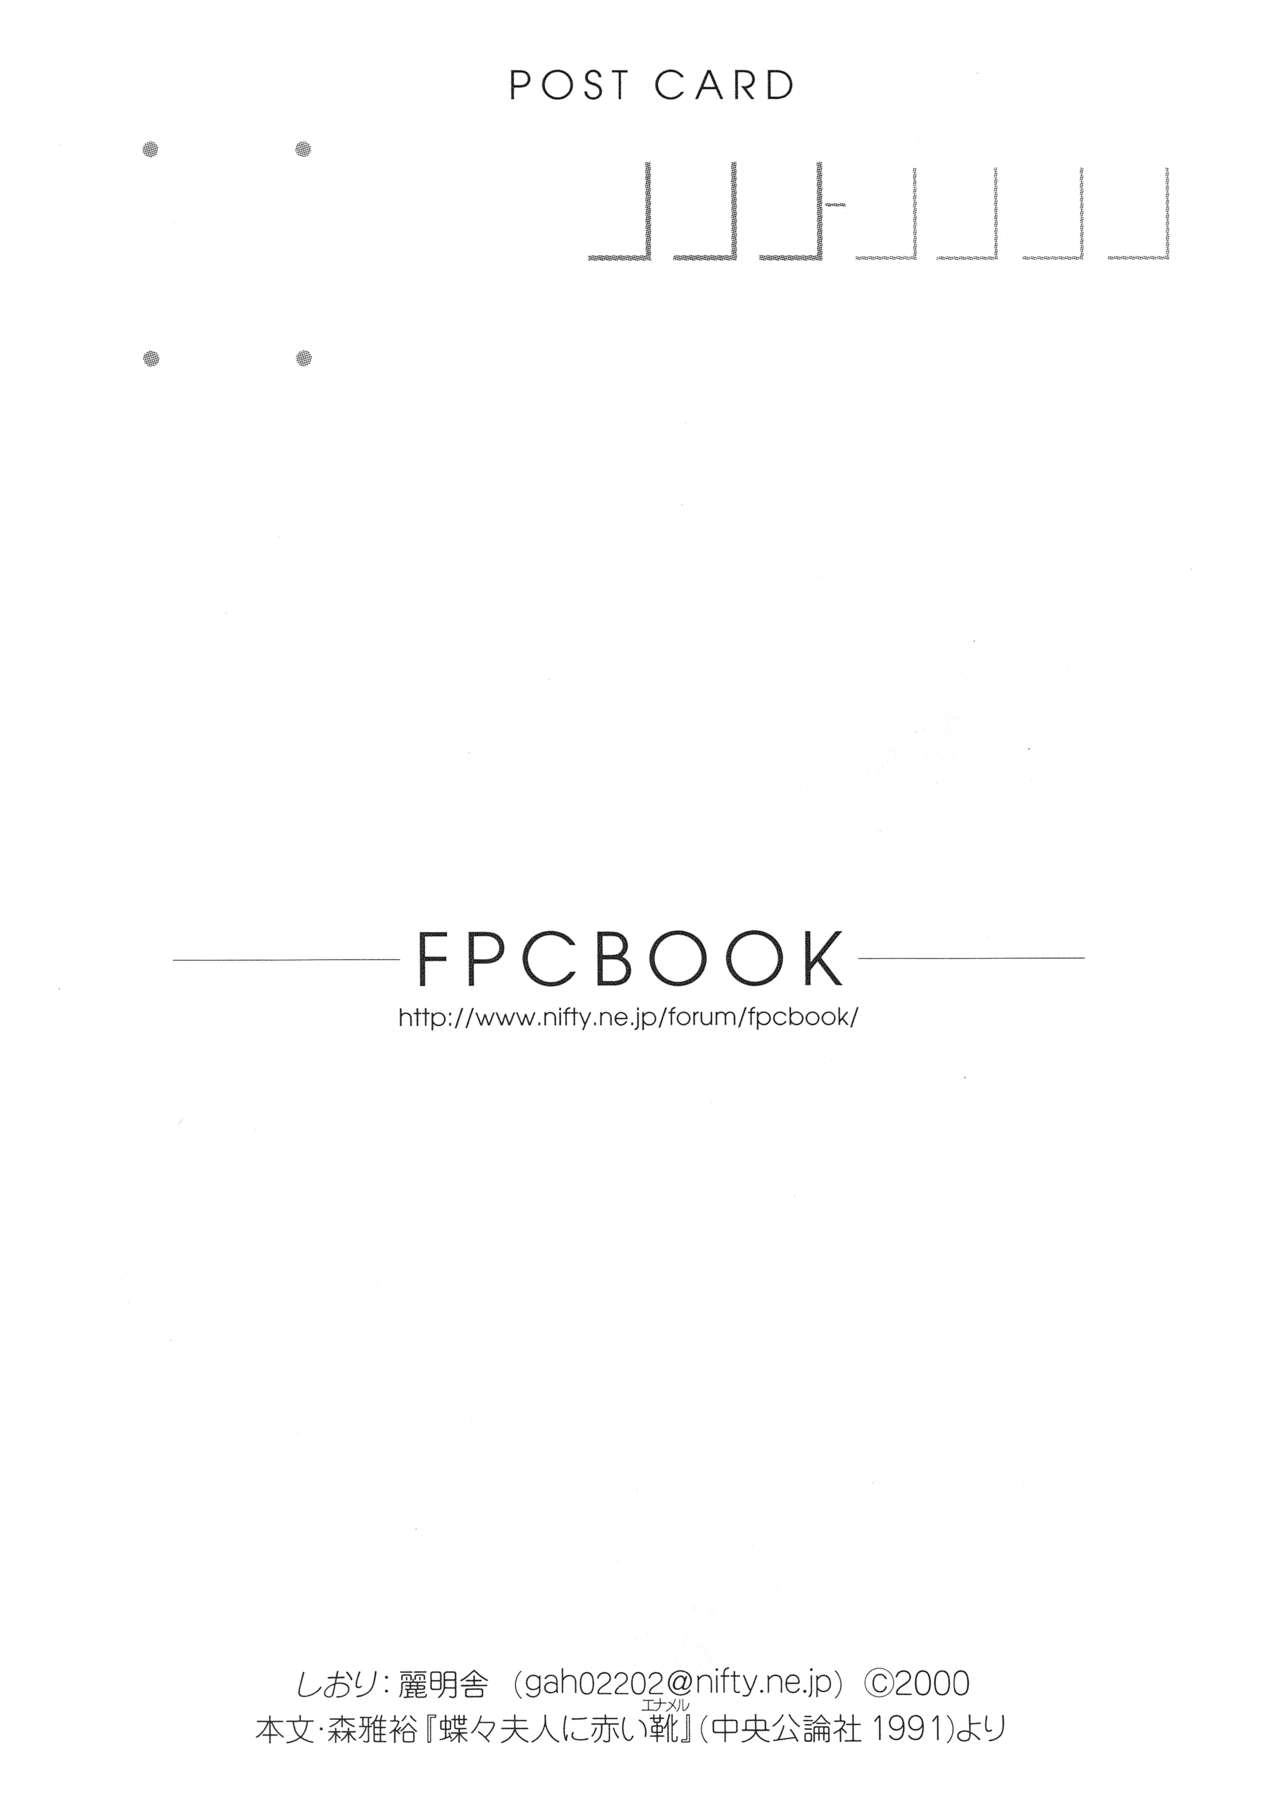 (C58) [Pasokon no Hon Forum] FPCBOOK POSTCARD BOOK 2000 19